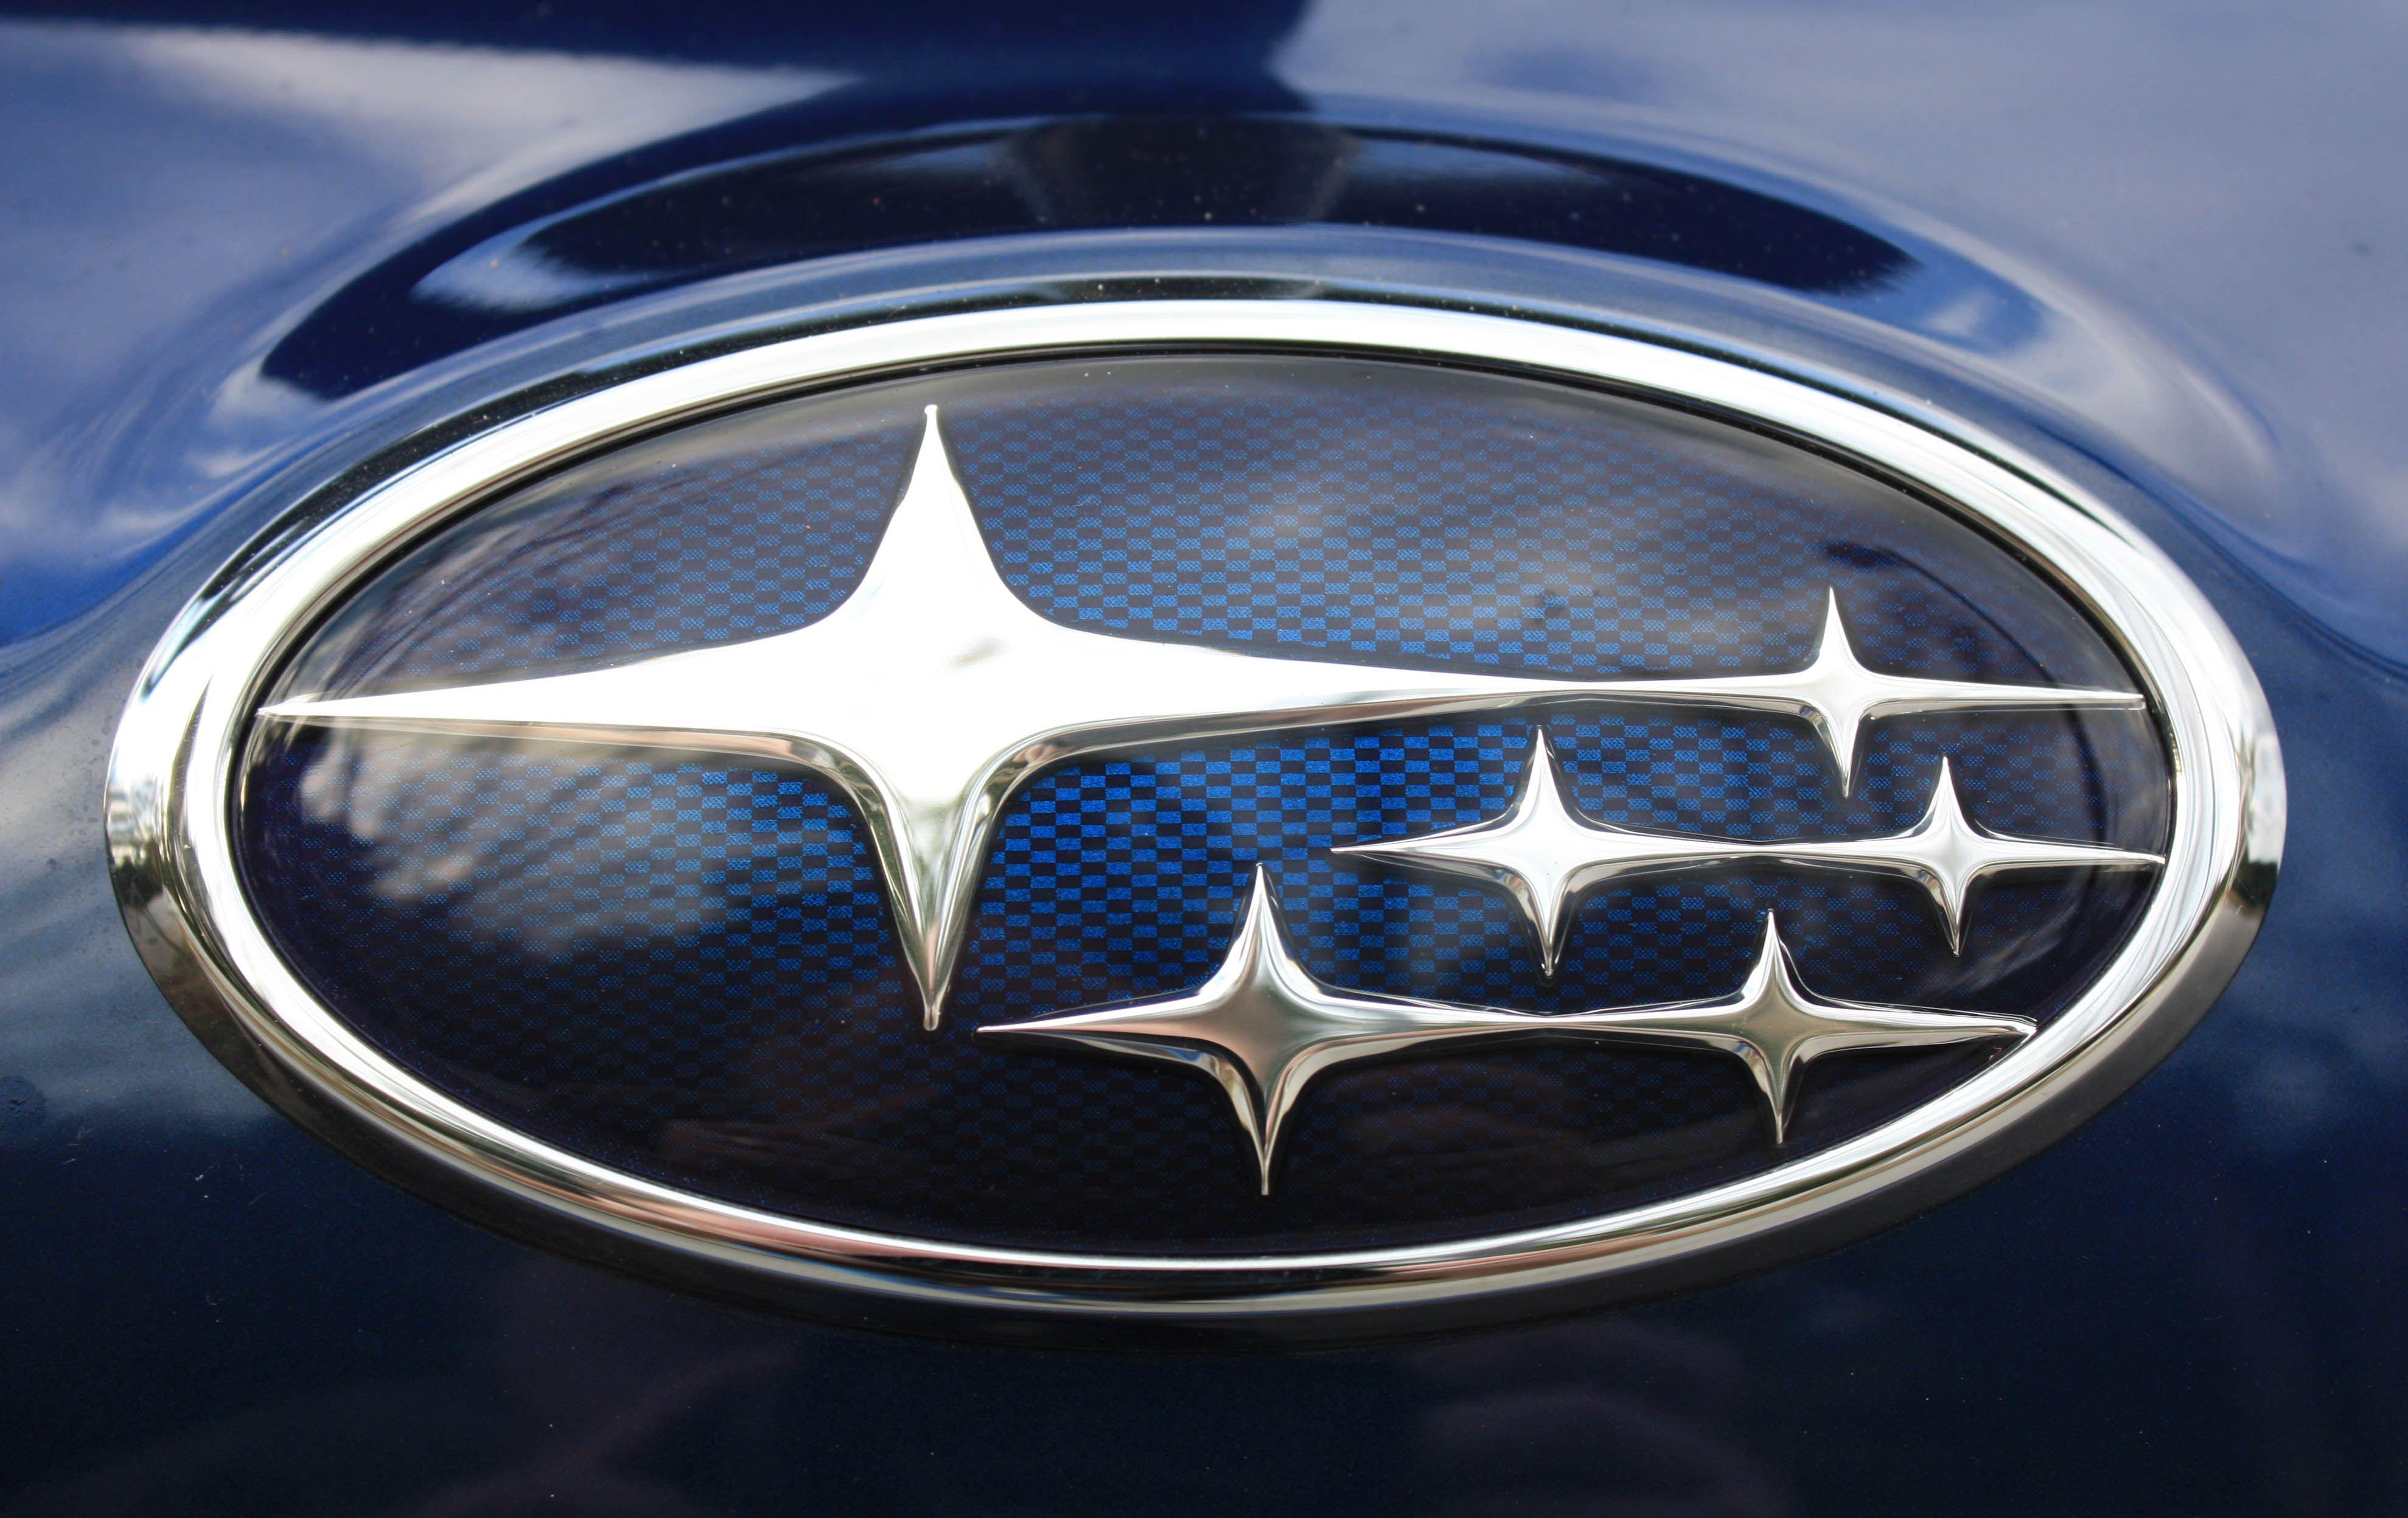 Old Subaru Logo - Subaru Logo, Subaru Car Symbol Meaning and History | Car Brand Names.com